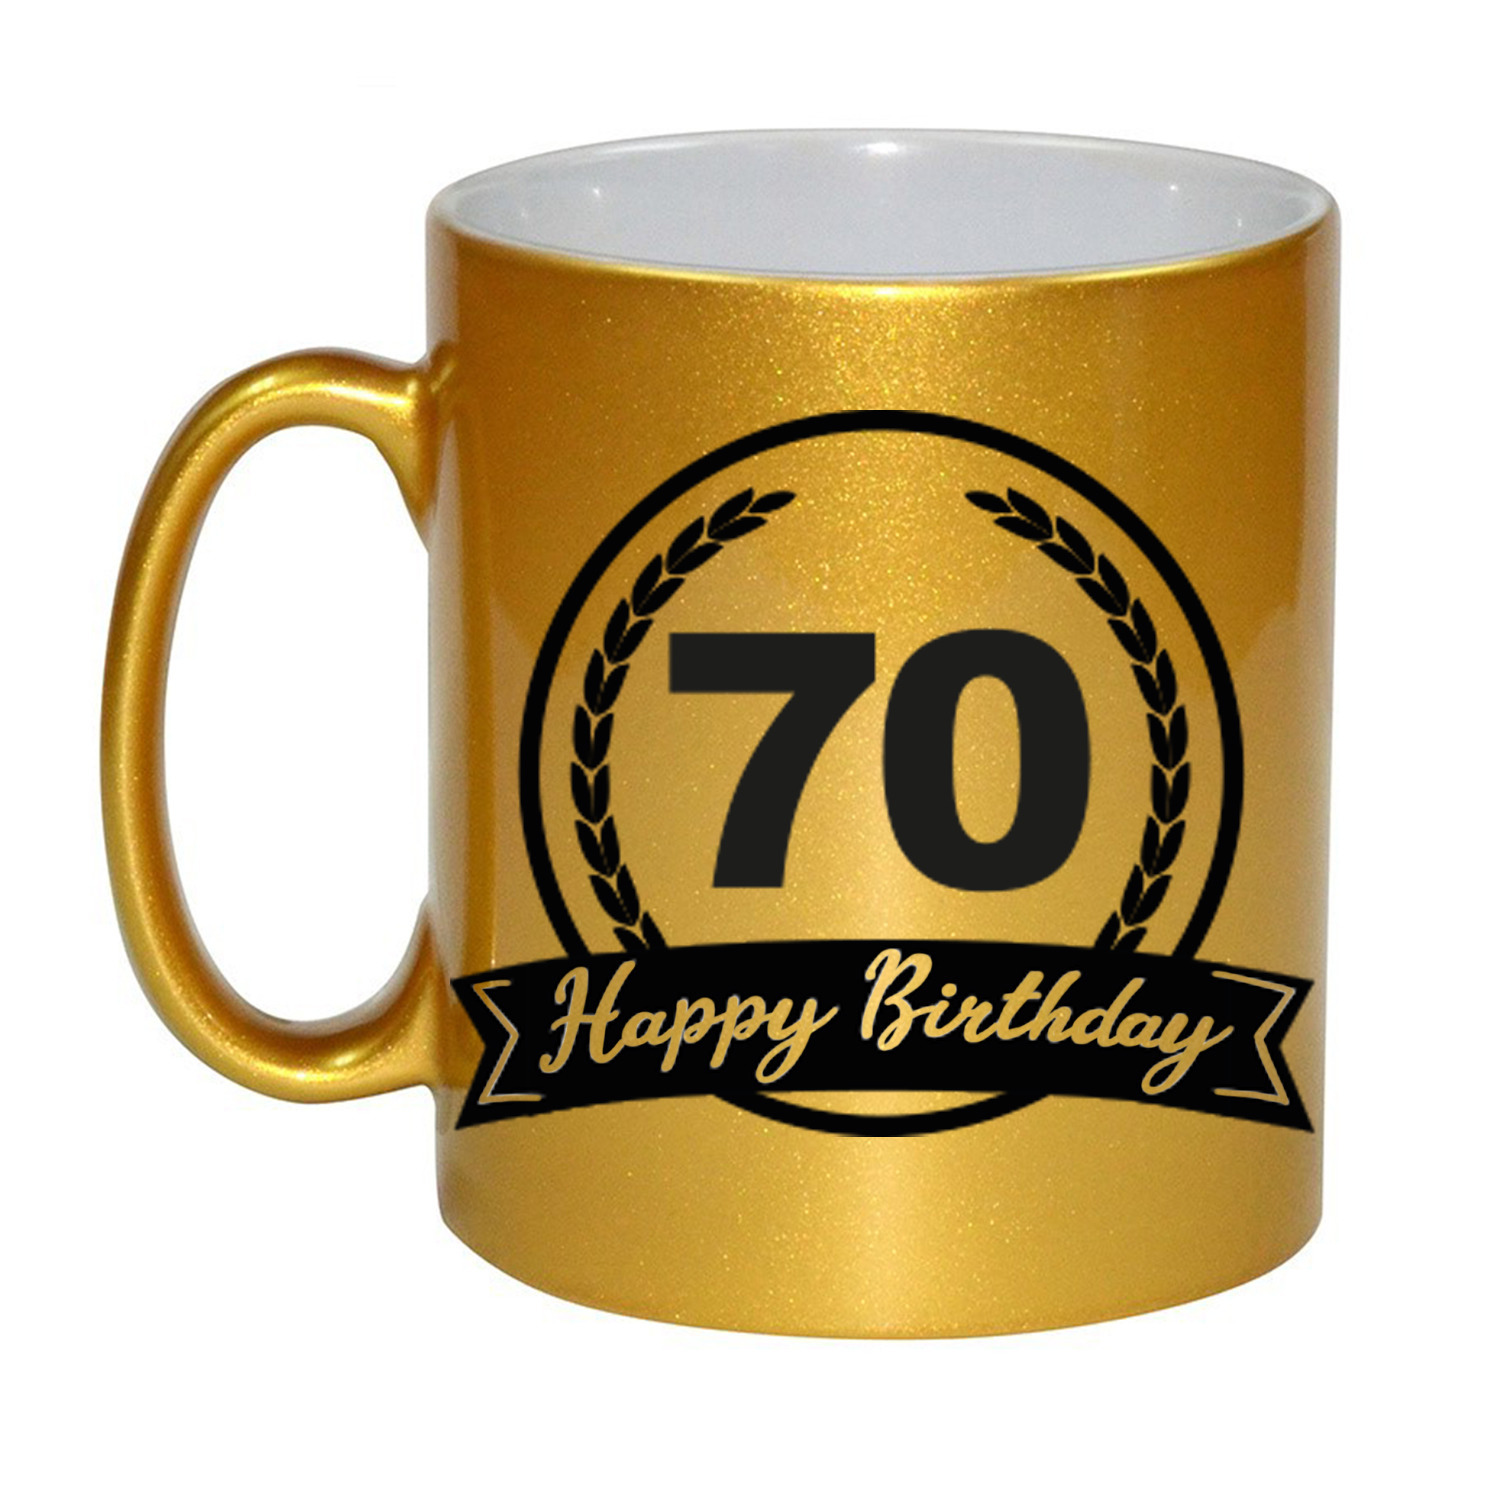 Happy Birthday 70 years gouden cadeau mok-beker met wimpel 330 ml